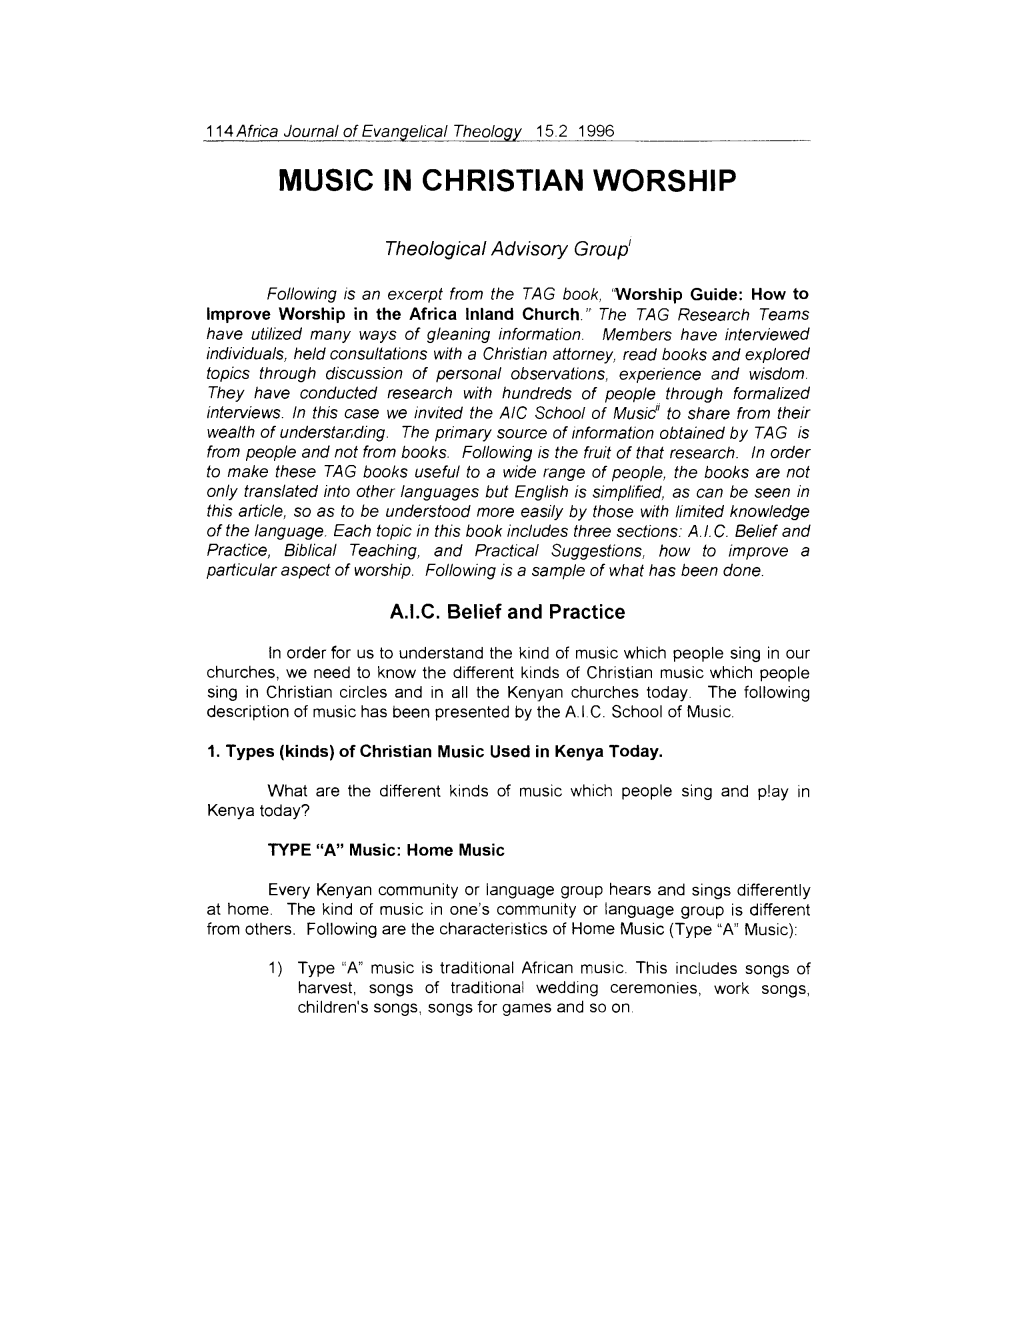 Music in Christian Worship